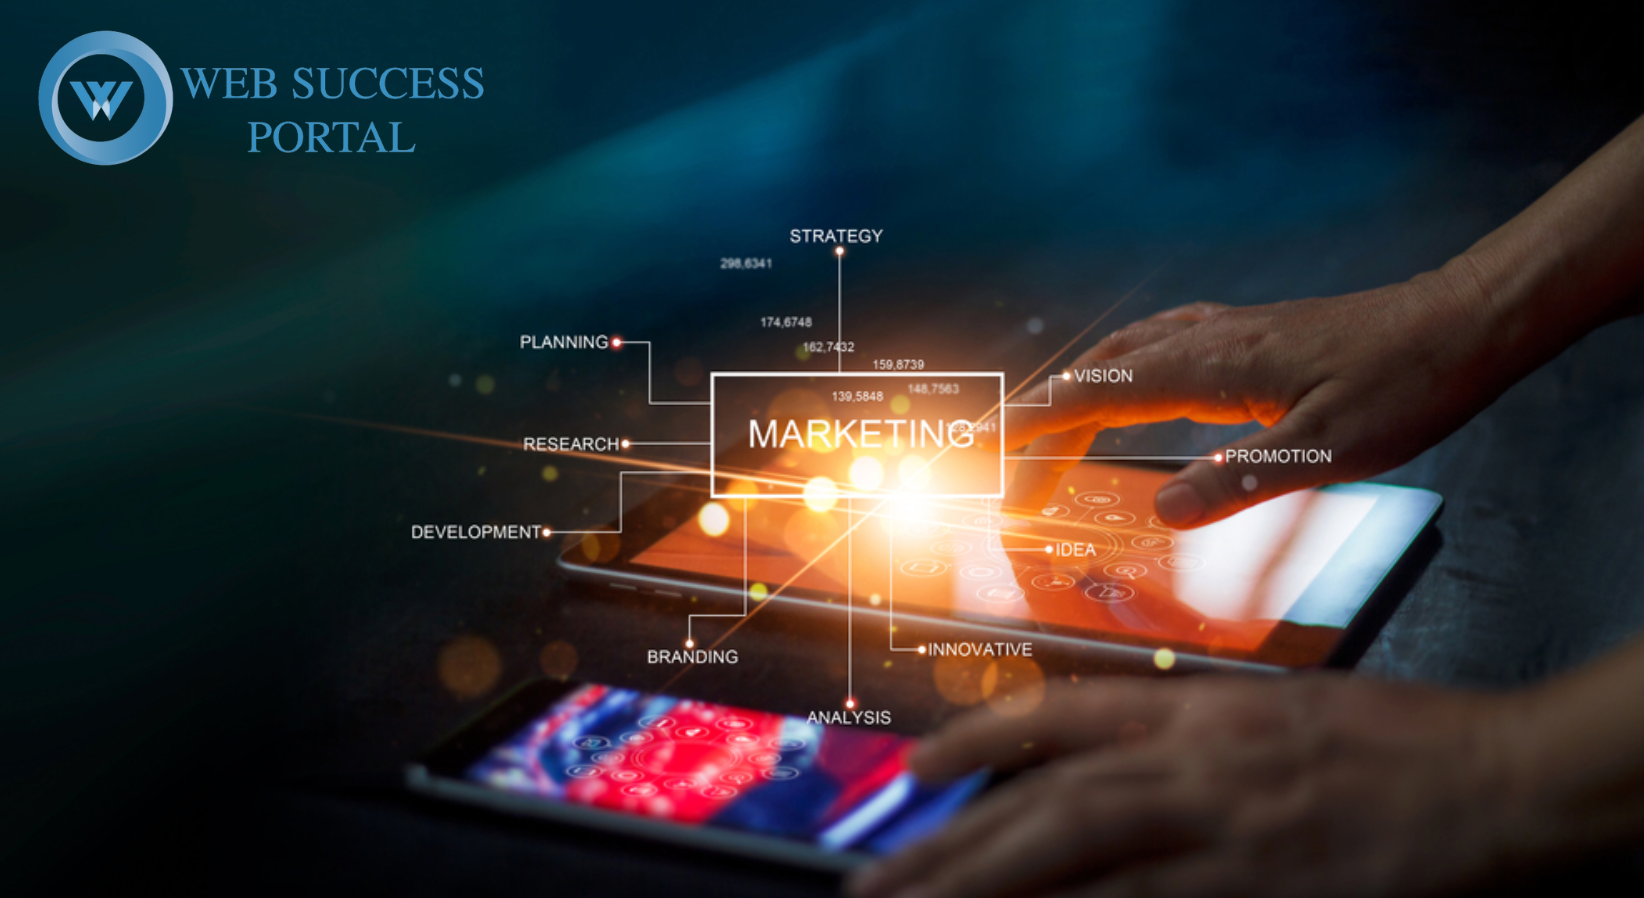 Web Success Portal Digital Marketing Tips